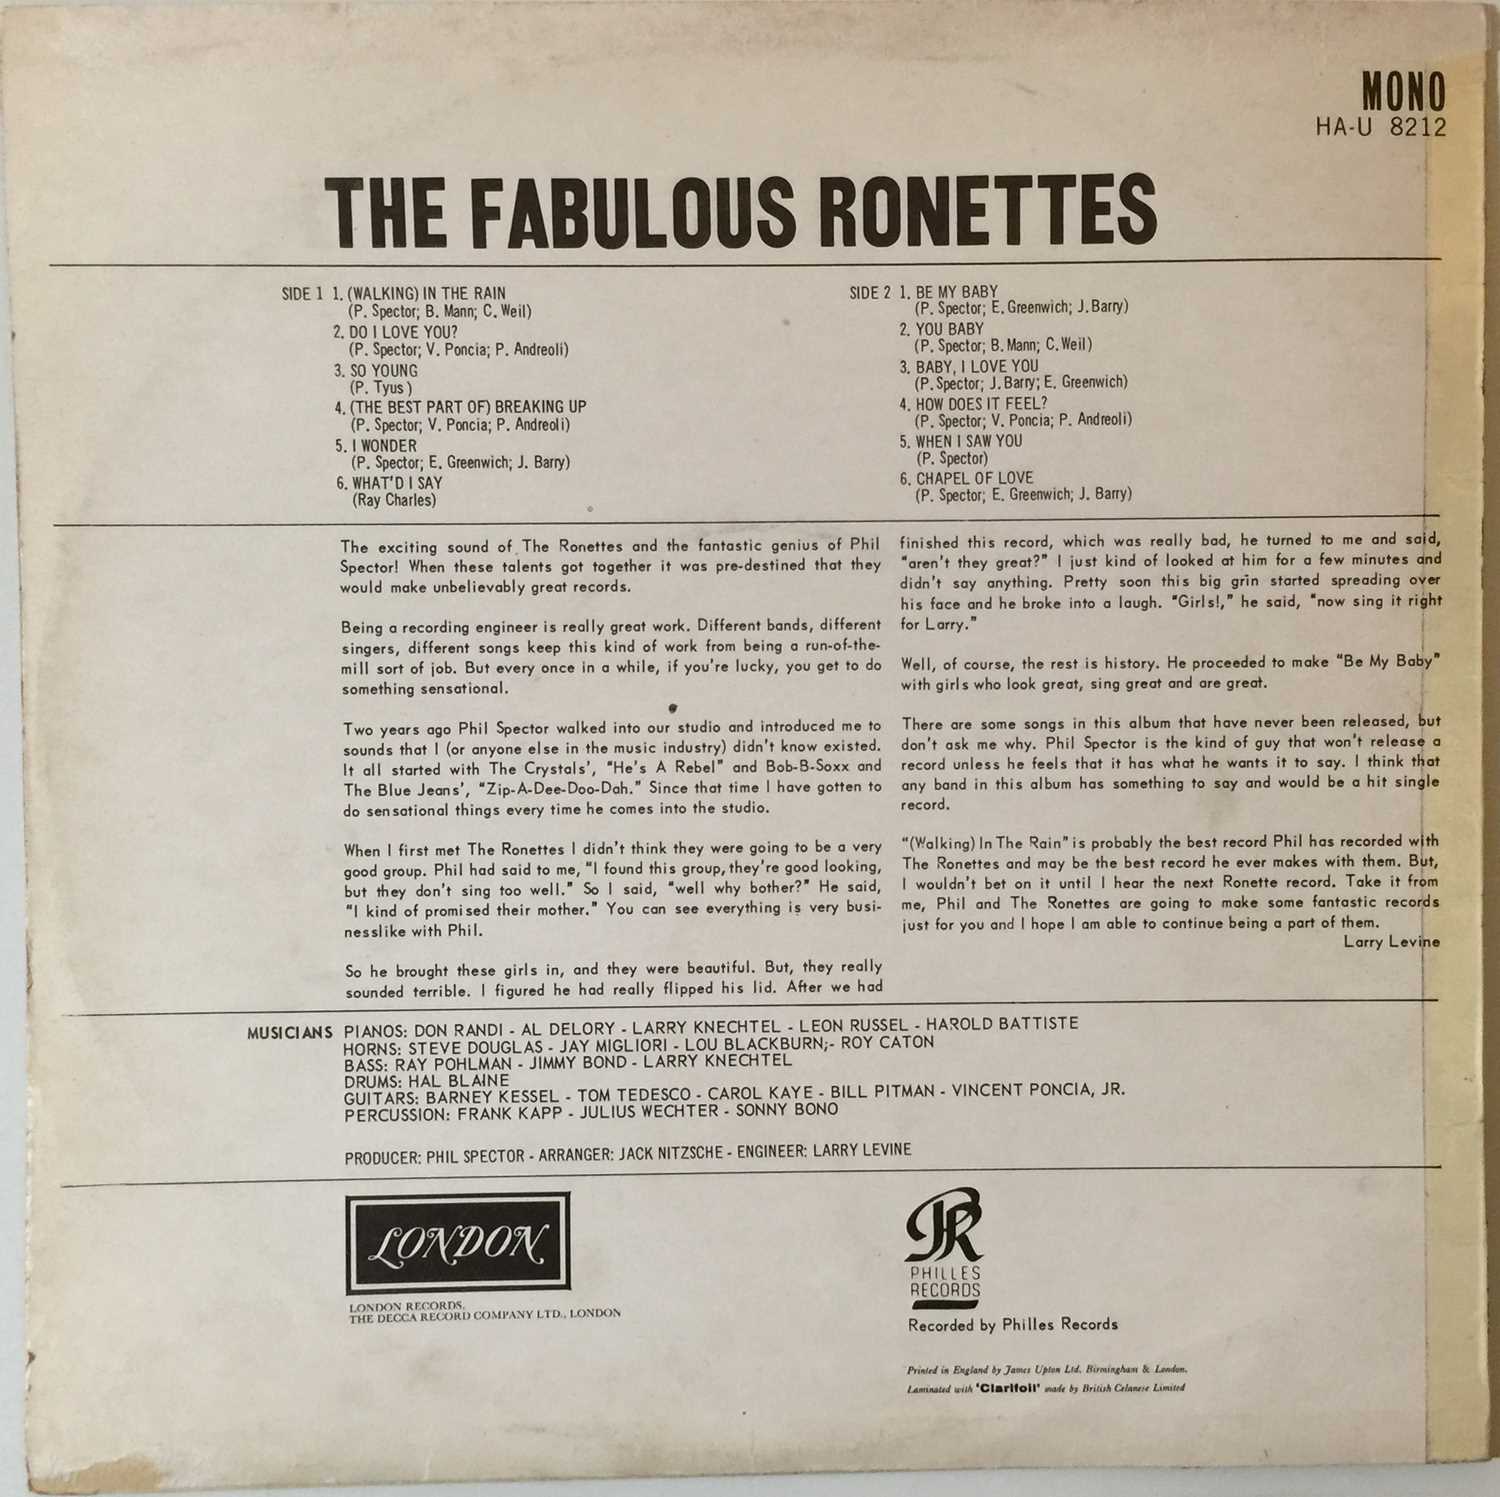 THE RONETTES - PRESENTING THE FABULOUS RONETTES LP (ORIGINAL UK COPY - LONDON HA-U 8212) - Image 3 of 5